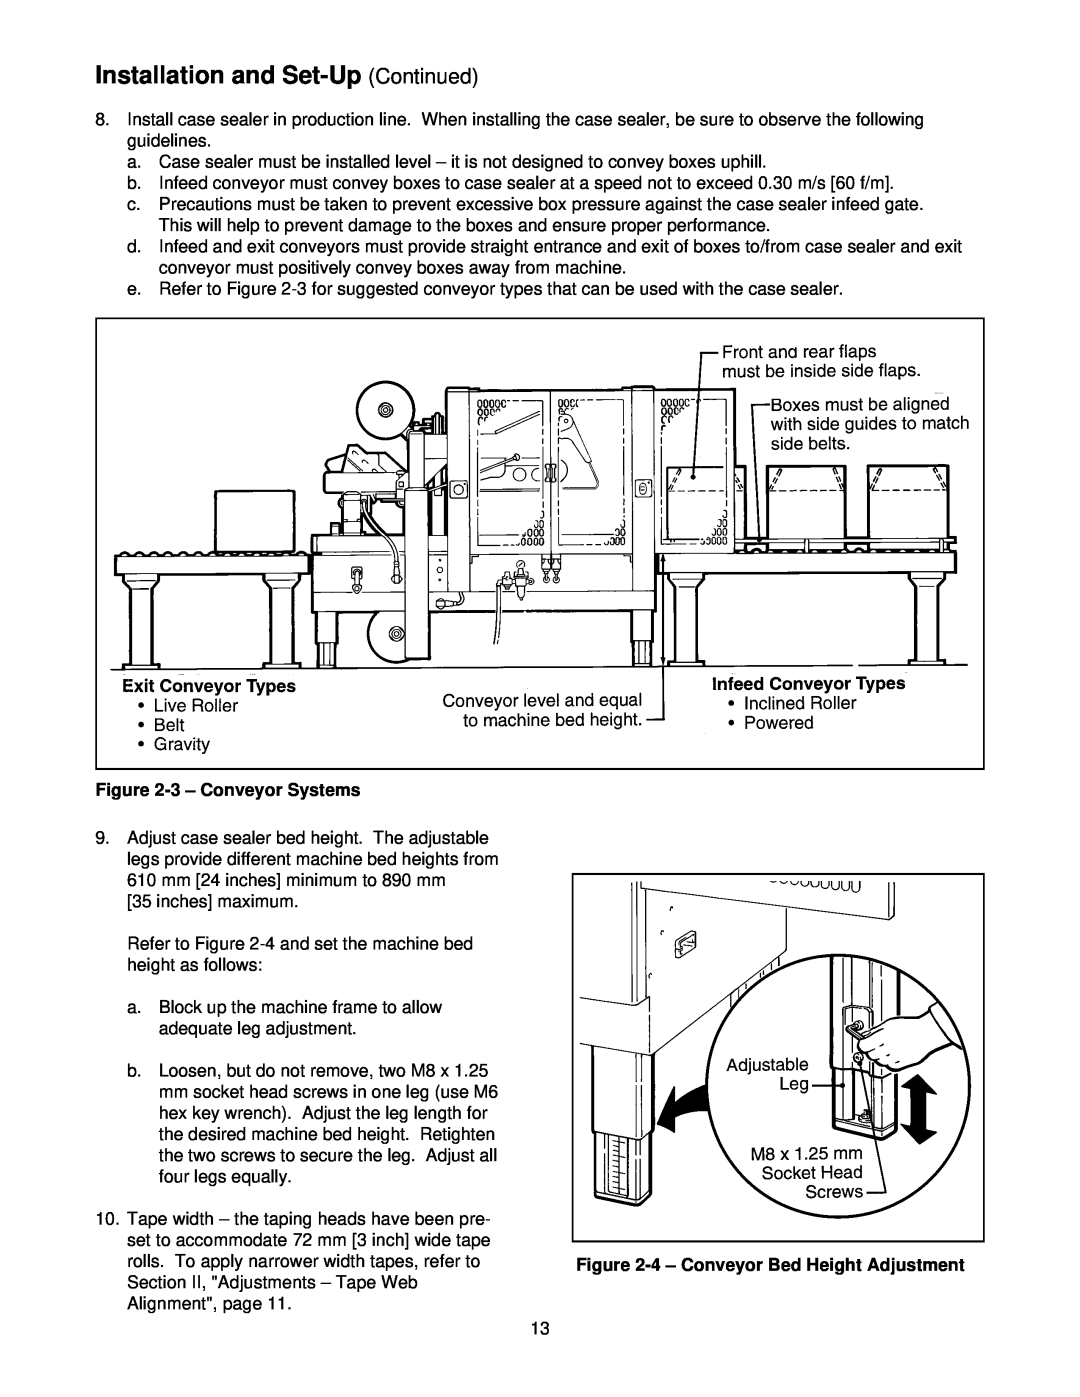 3M 39600 manual 3 - Conveyor Systems, 4 - Conveyor Bed Height Adjustment 